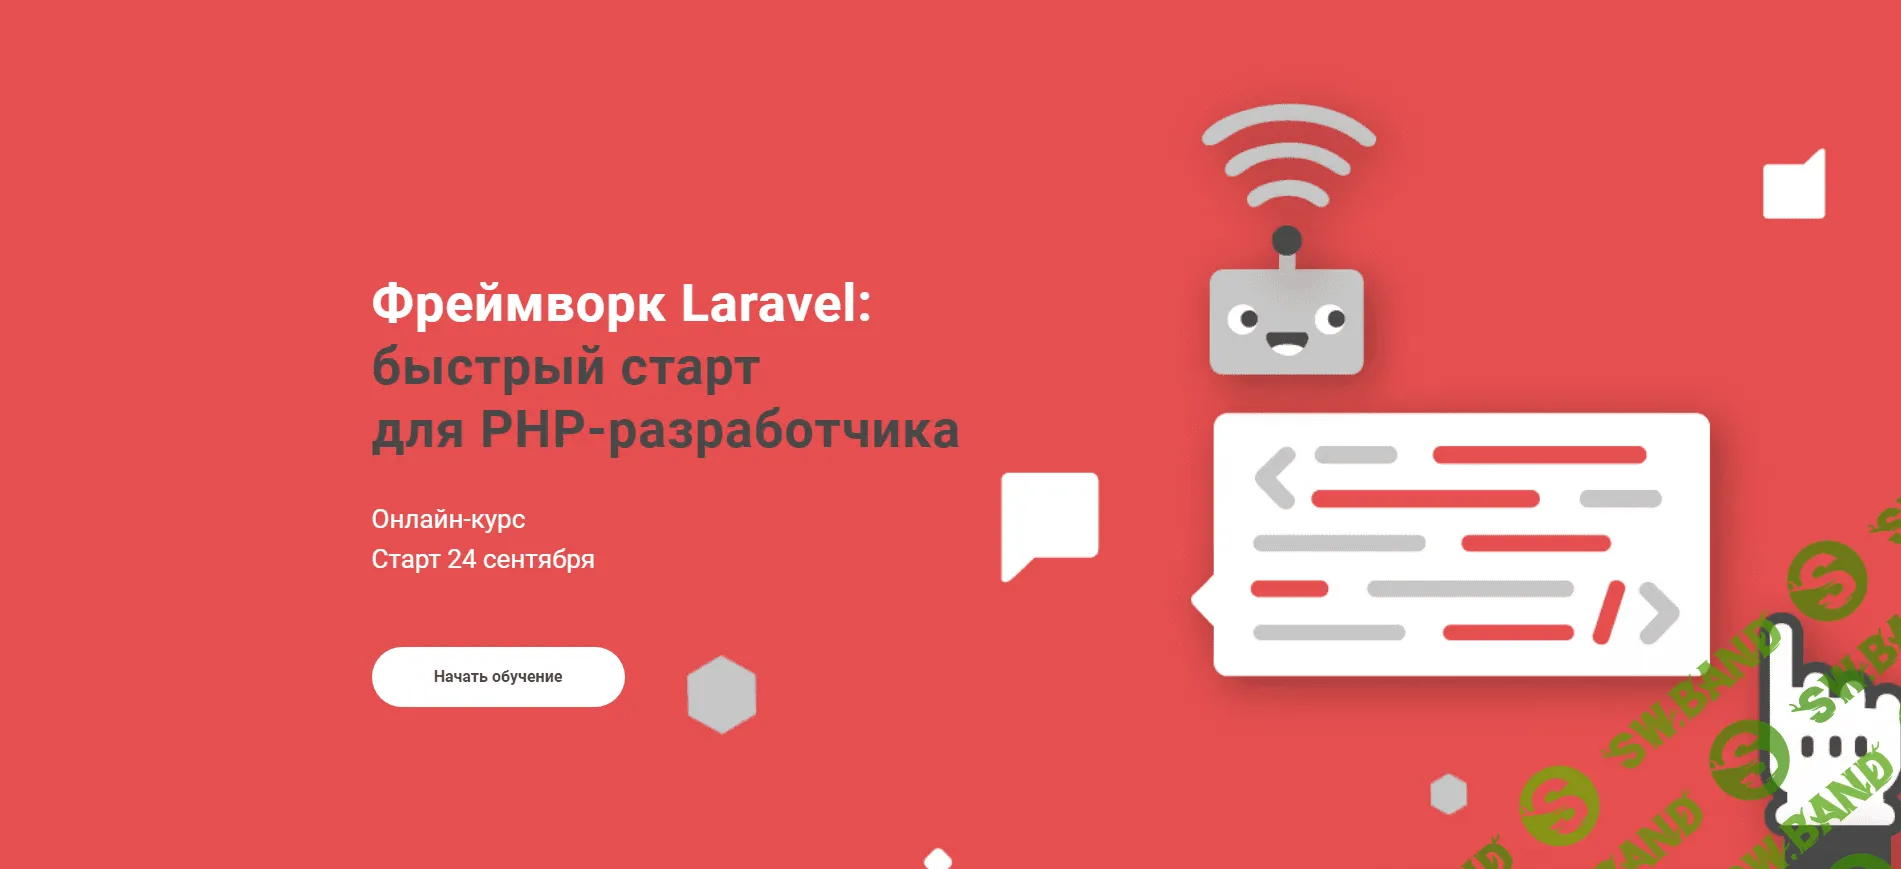 [Роман Давыдов] Фреймворк Laravel быстрый старт для PHP-разработчика (2018)